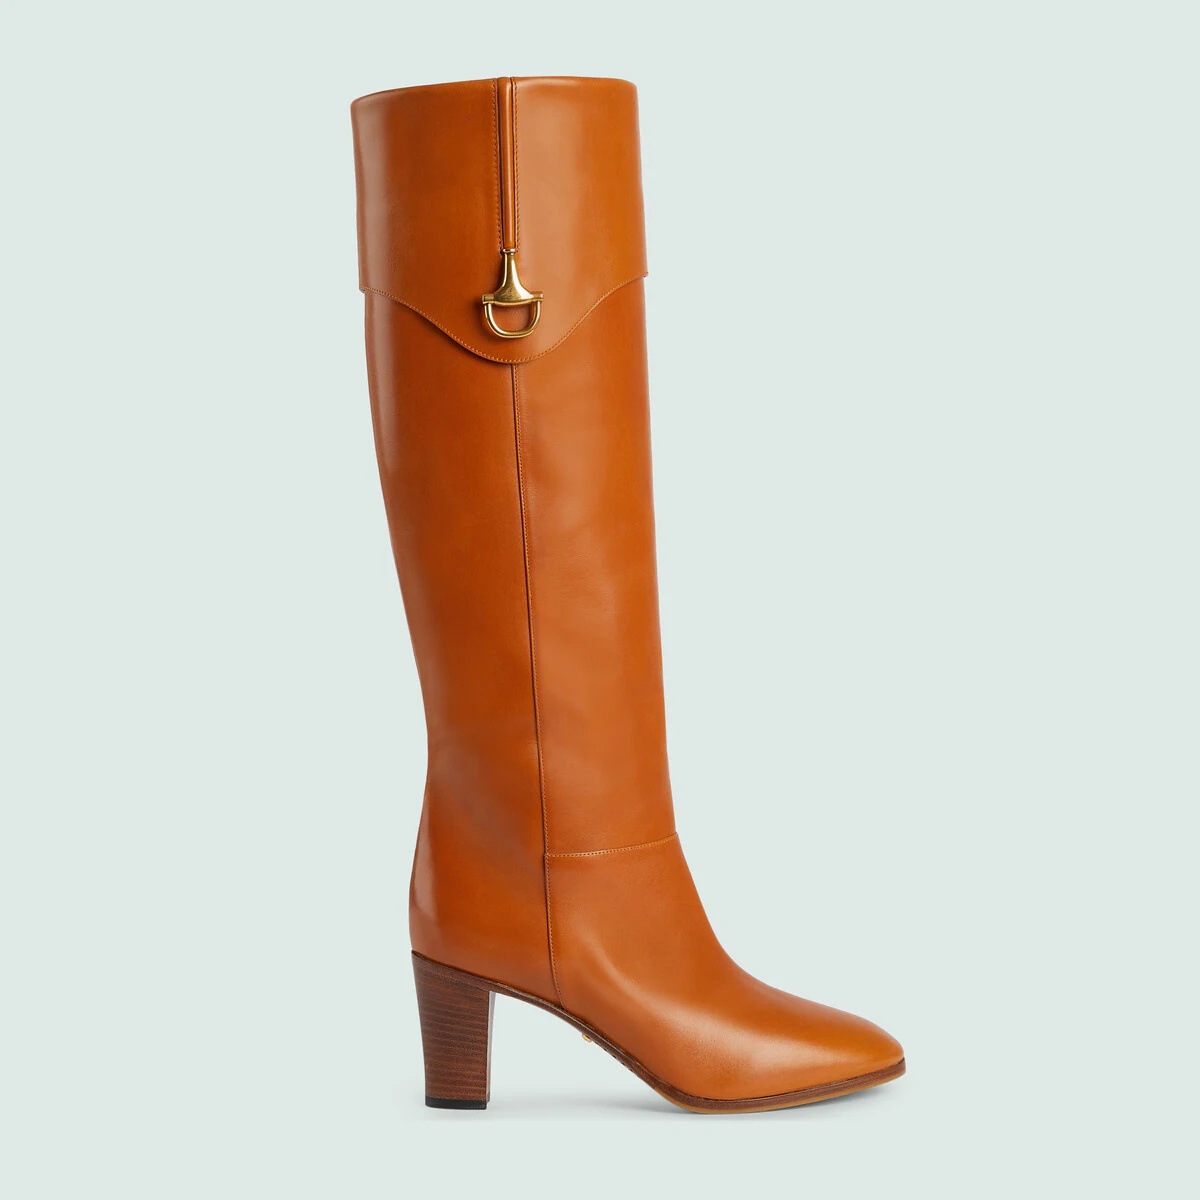 Women's Horsebit ankle boot